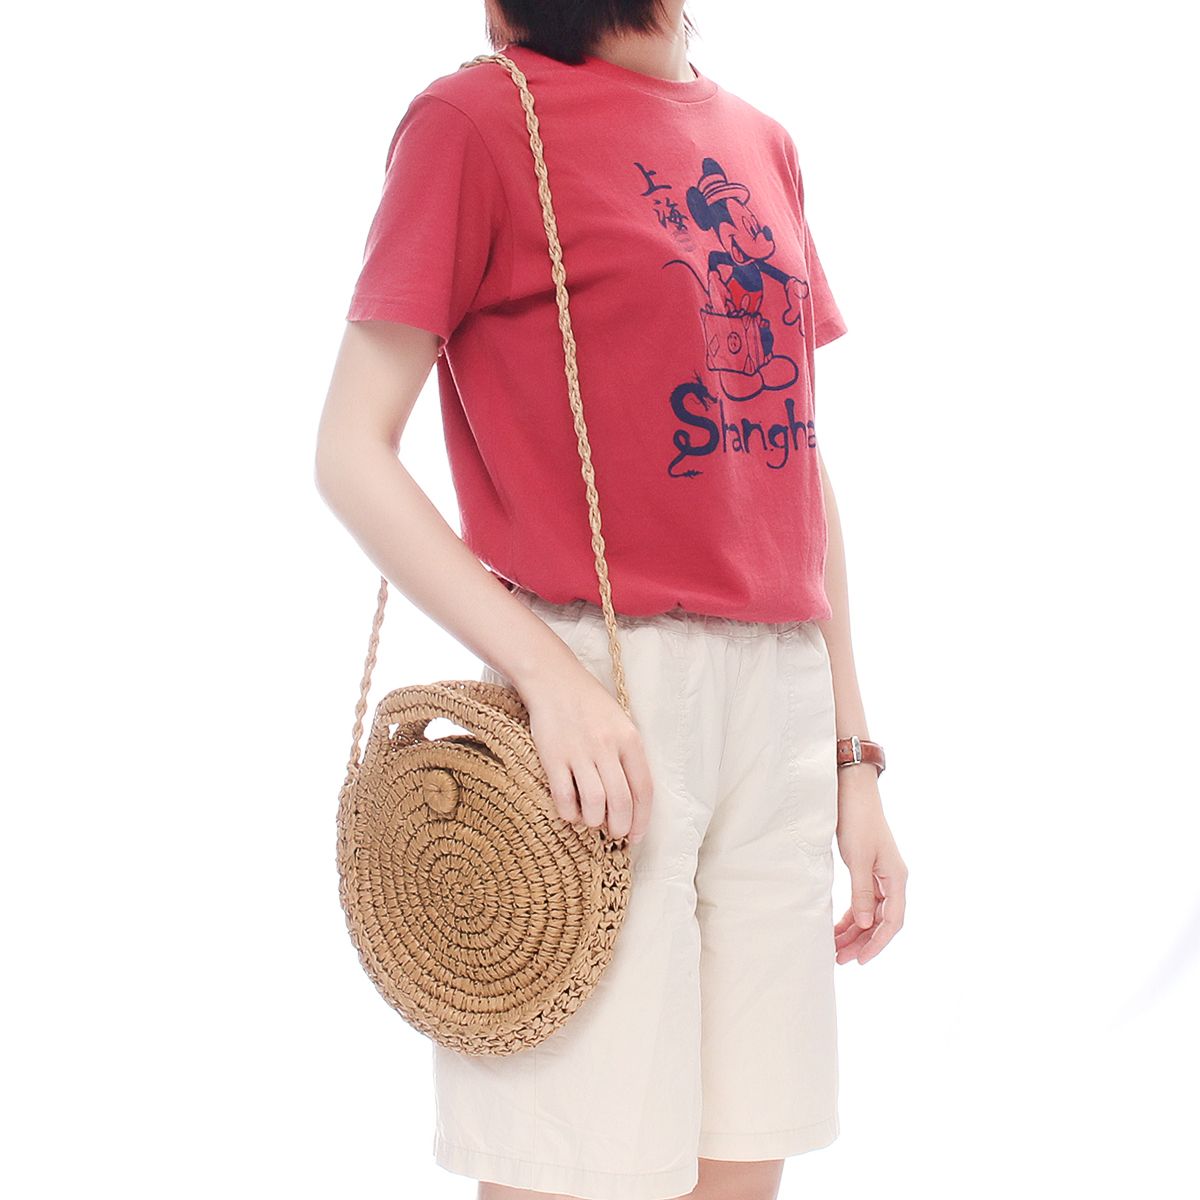 Round-Straw-Bag-Women-Rattan-Circle-Handwoven-Shoulder-Bag-1639644